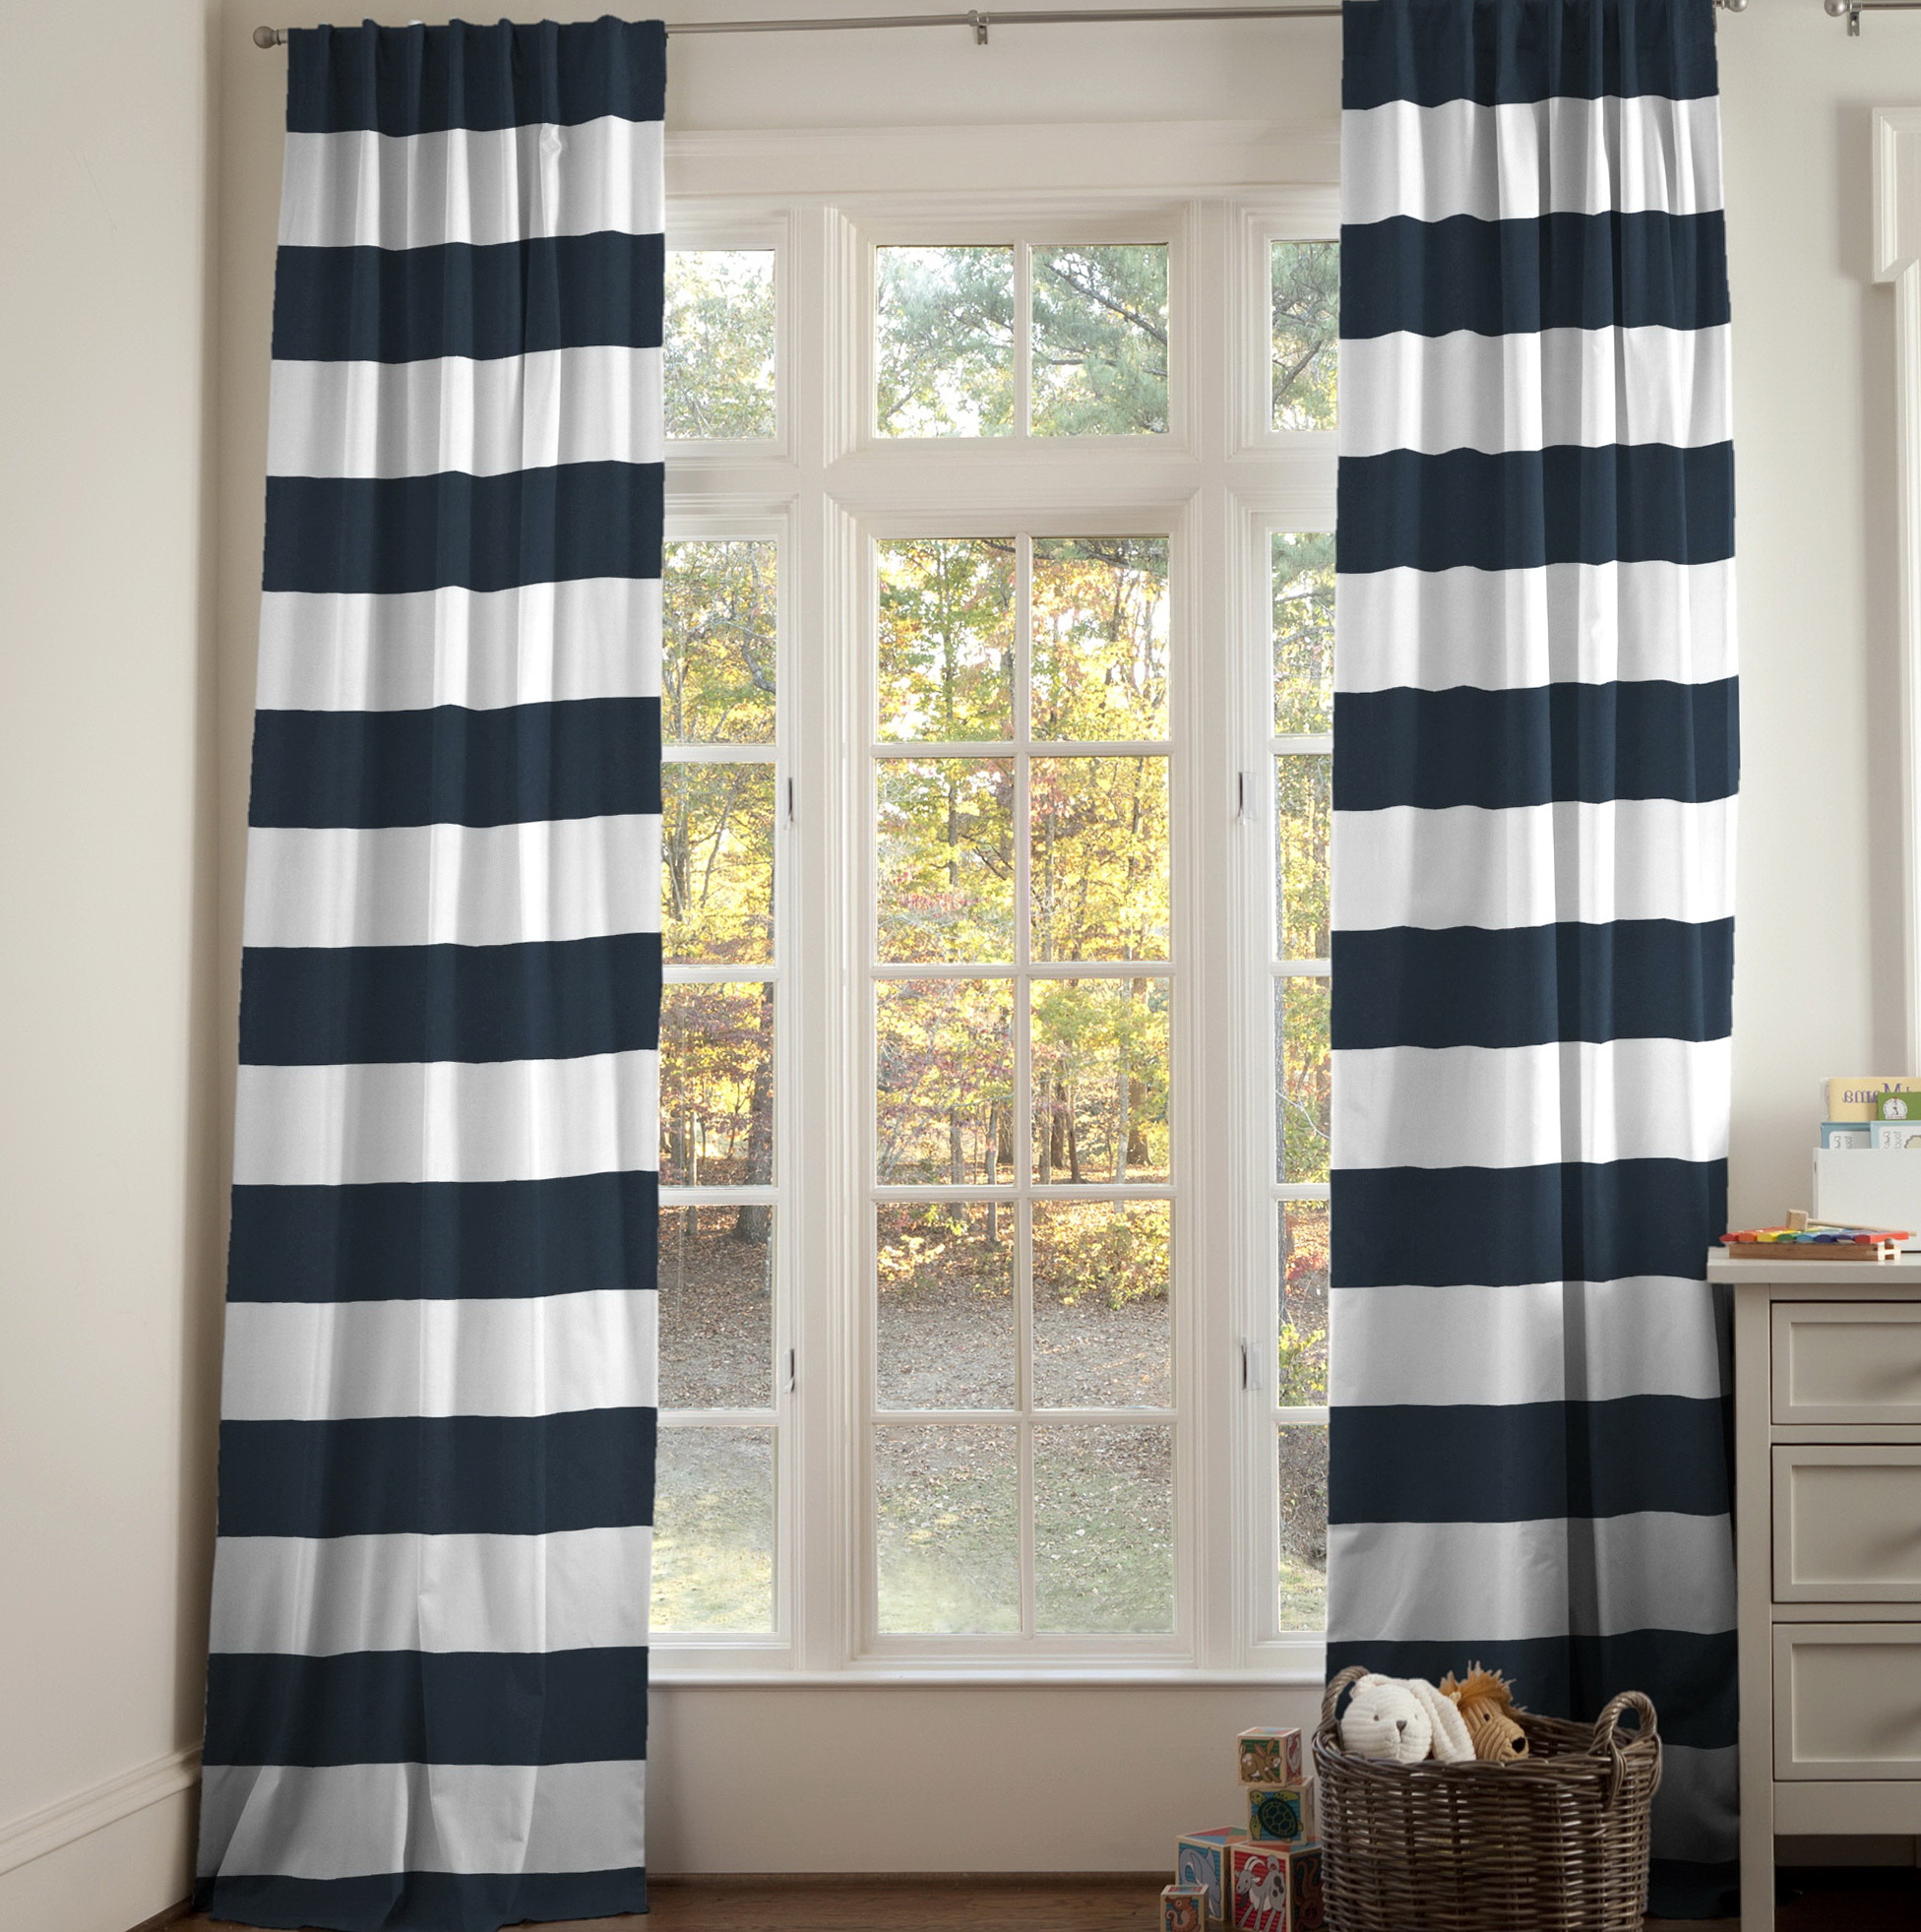 Standard Curtain Lengths Canada Home Design Ideas